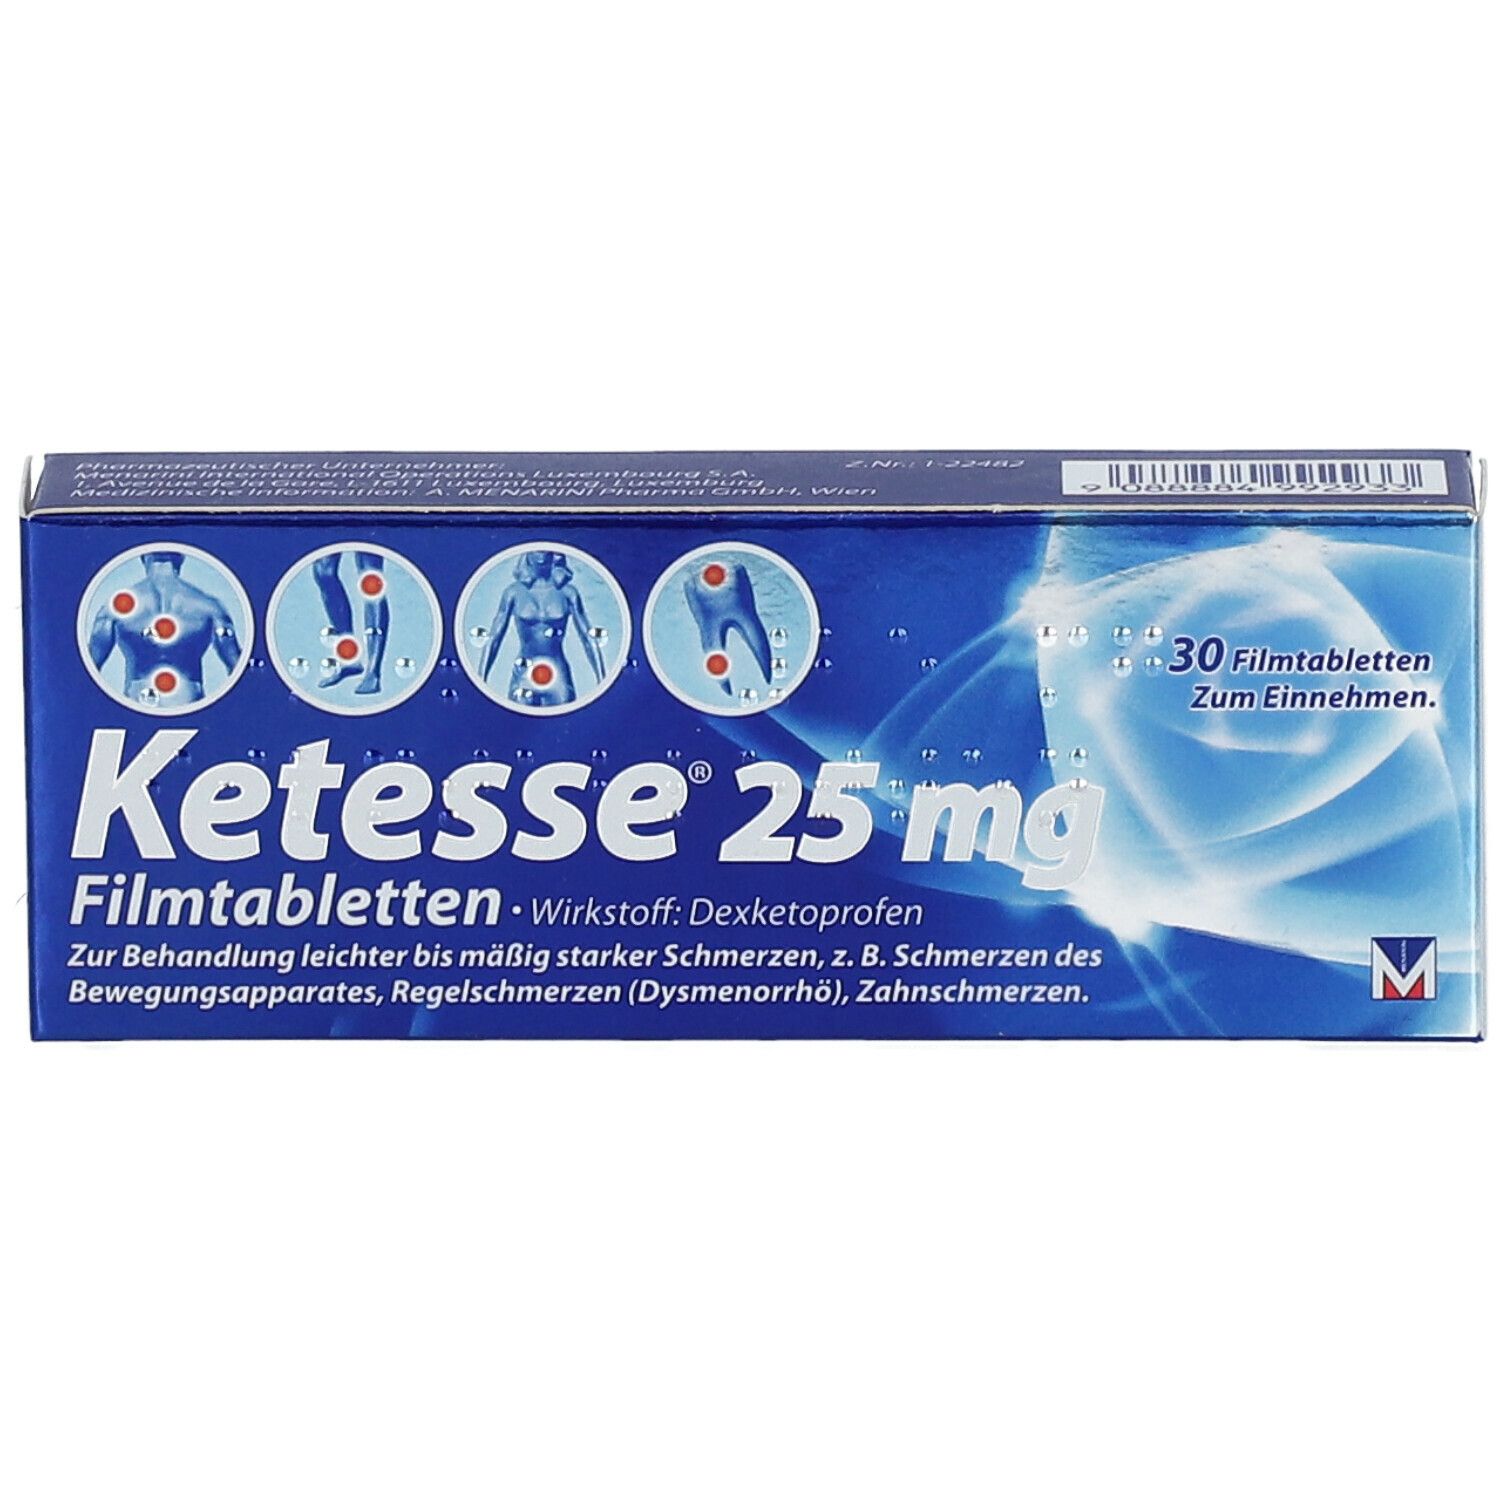 Ketesse® 25 mg